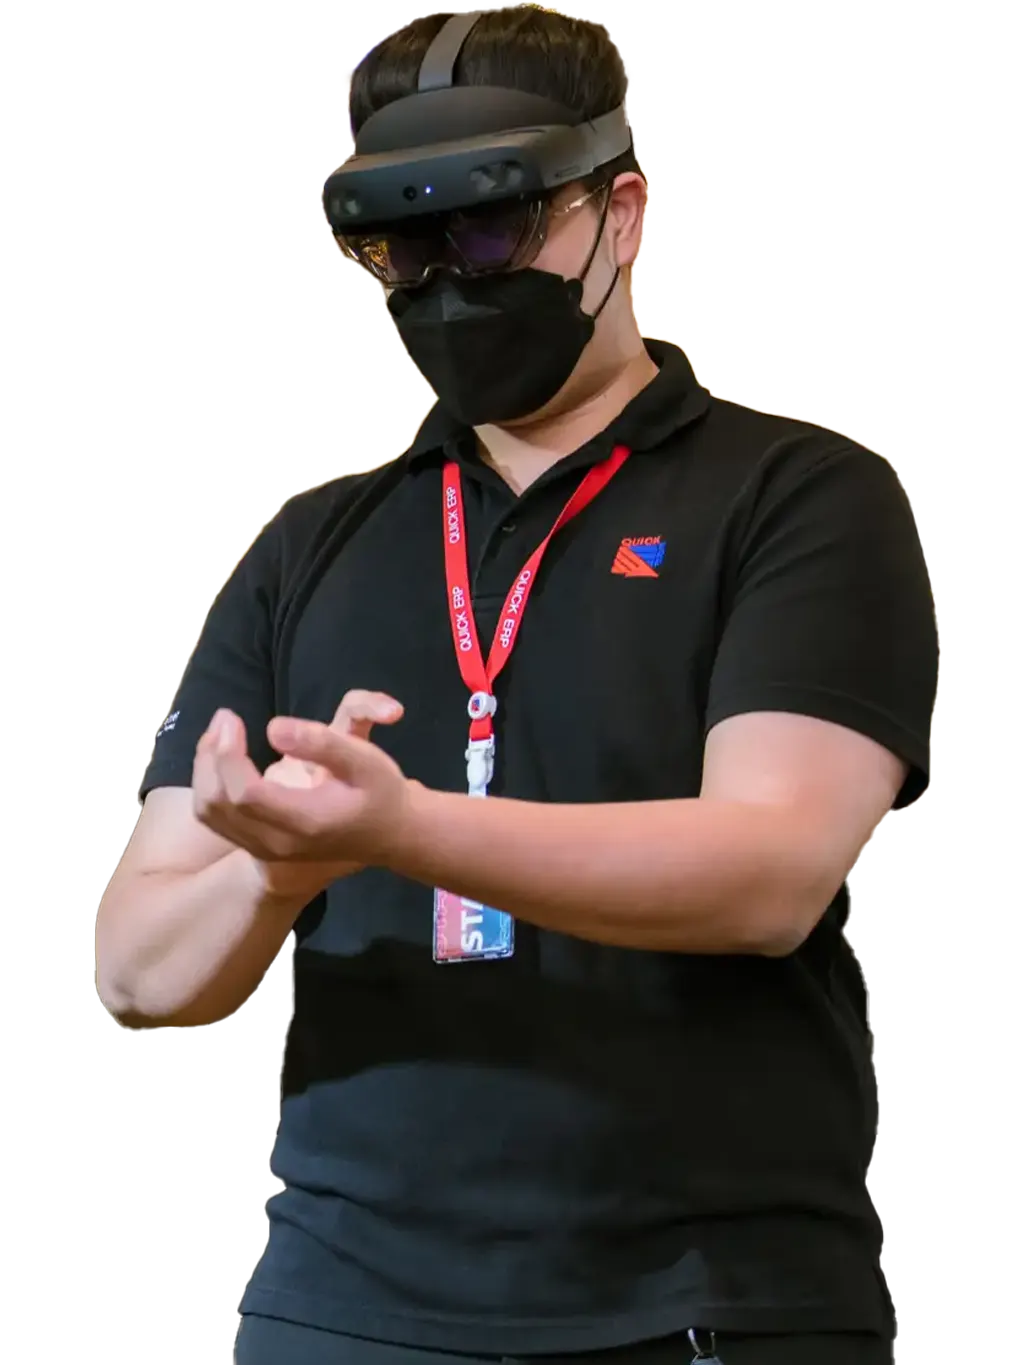 Using HoloLens 2 1